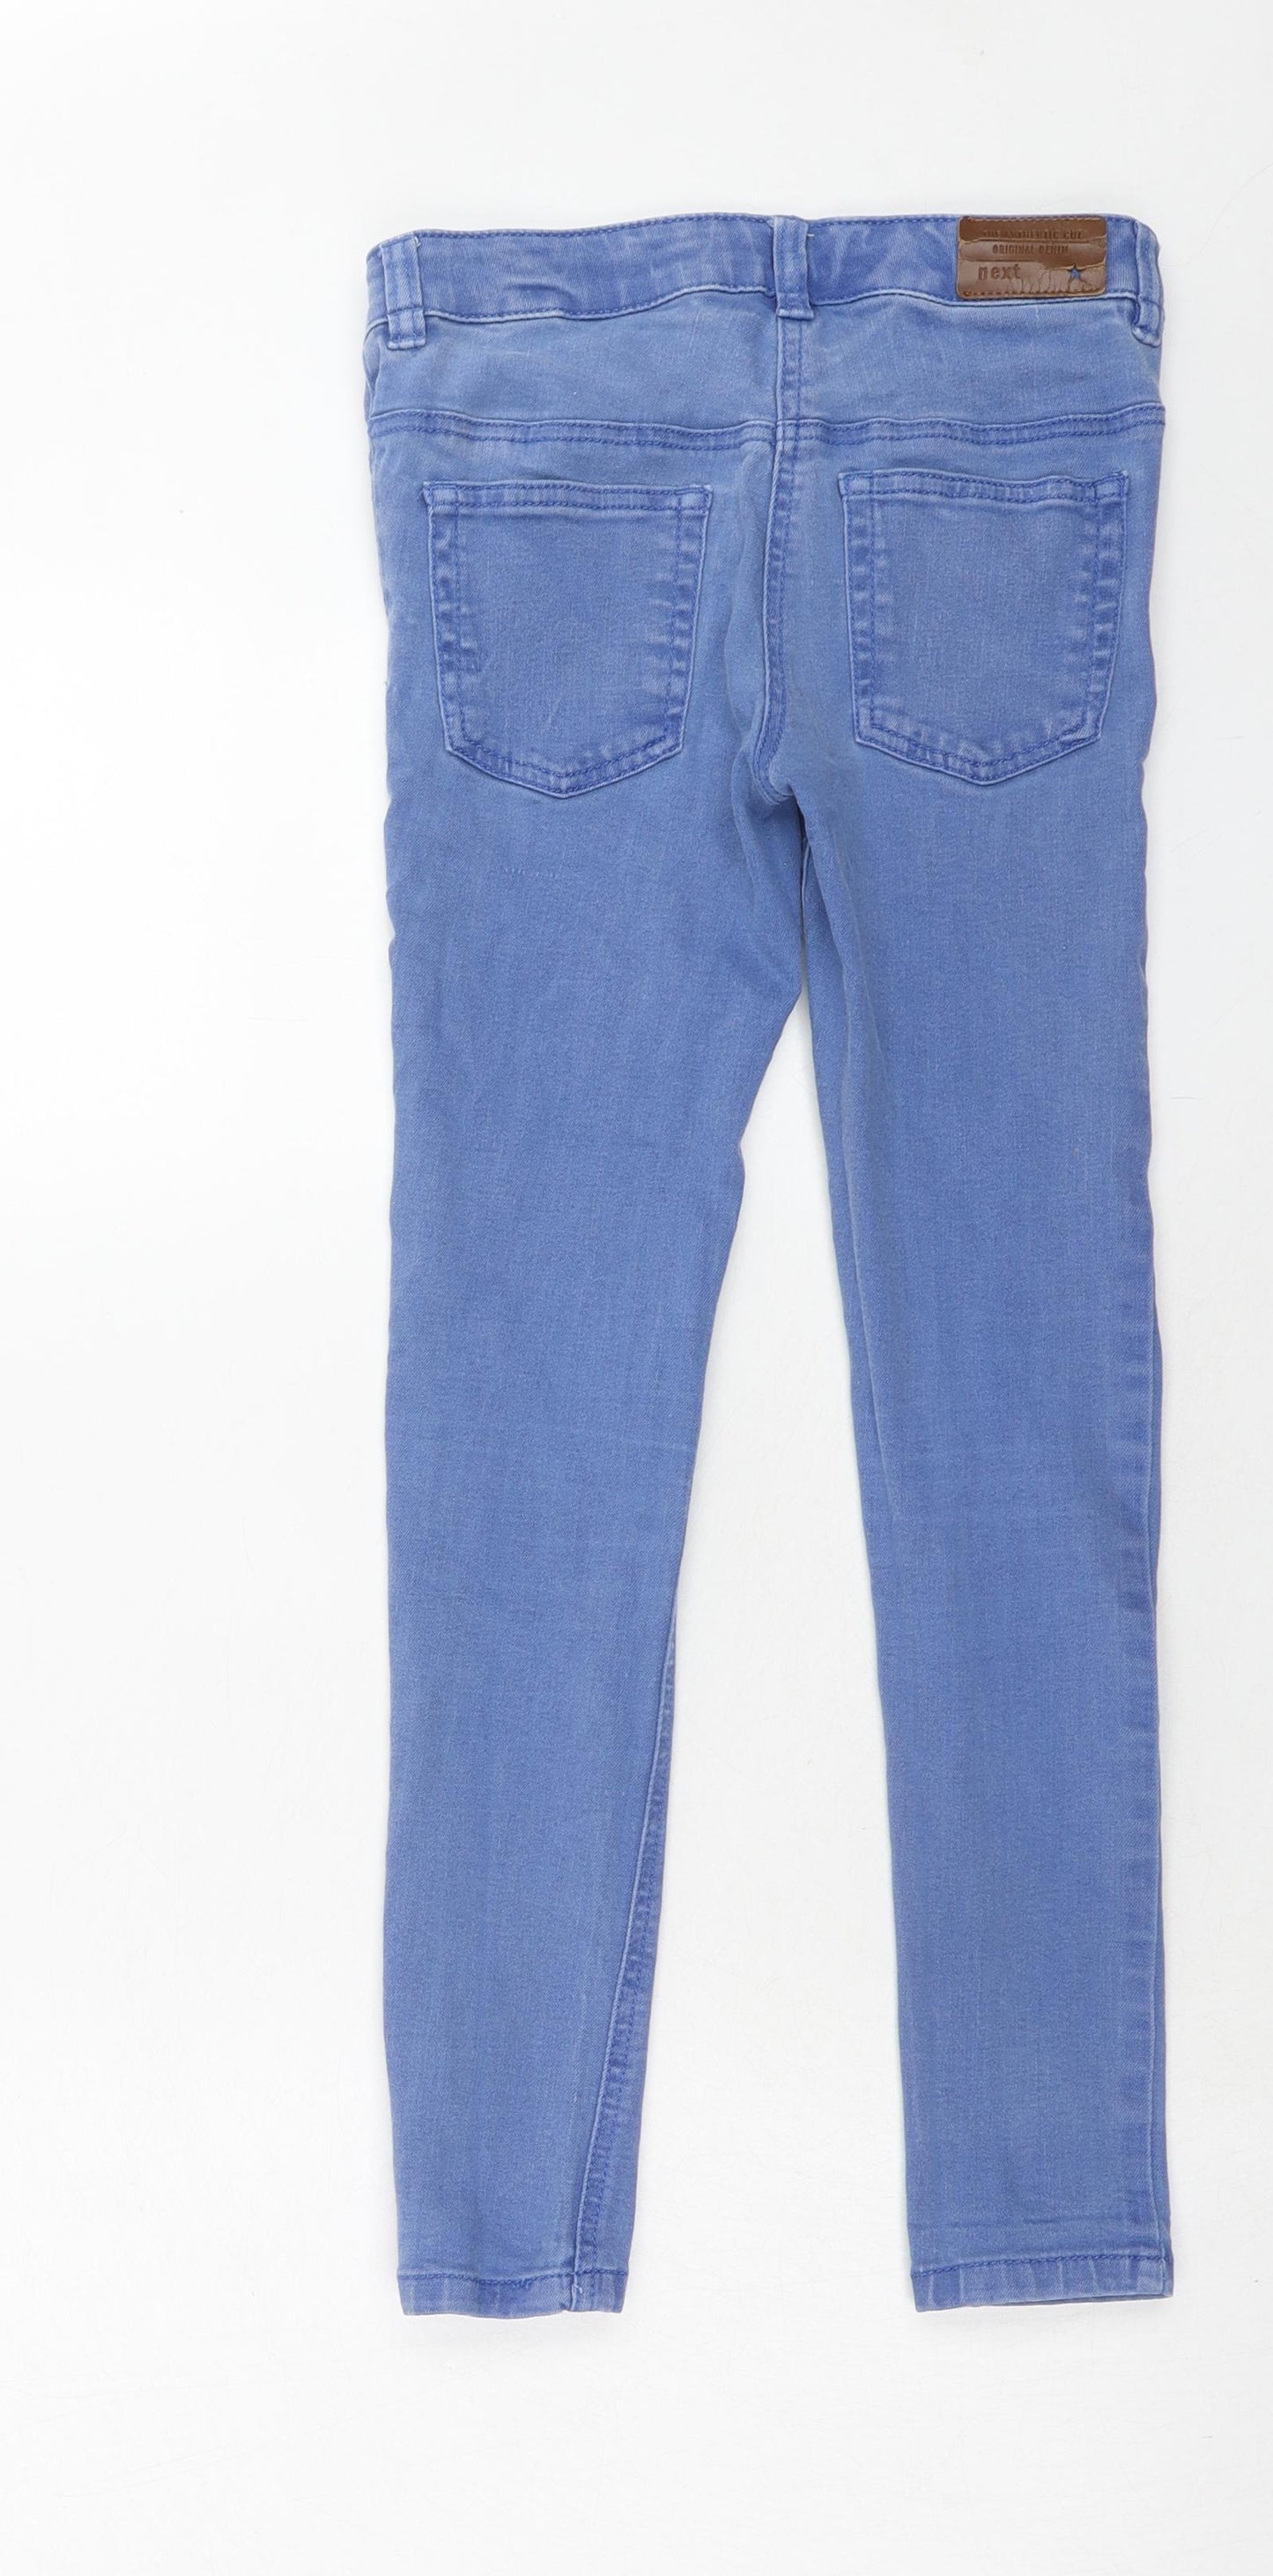 NEXT Girls Blue Cotton Skinny Jeans Size 10 Years Regular Zip